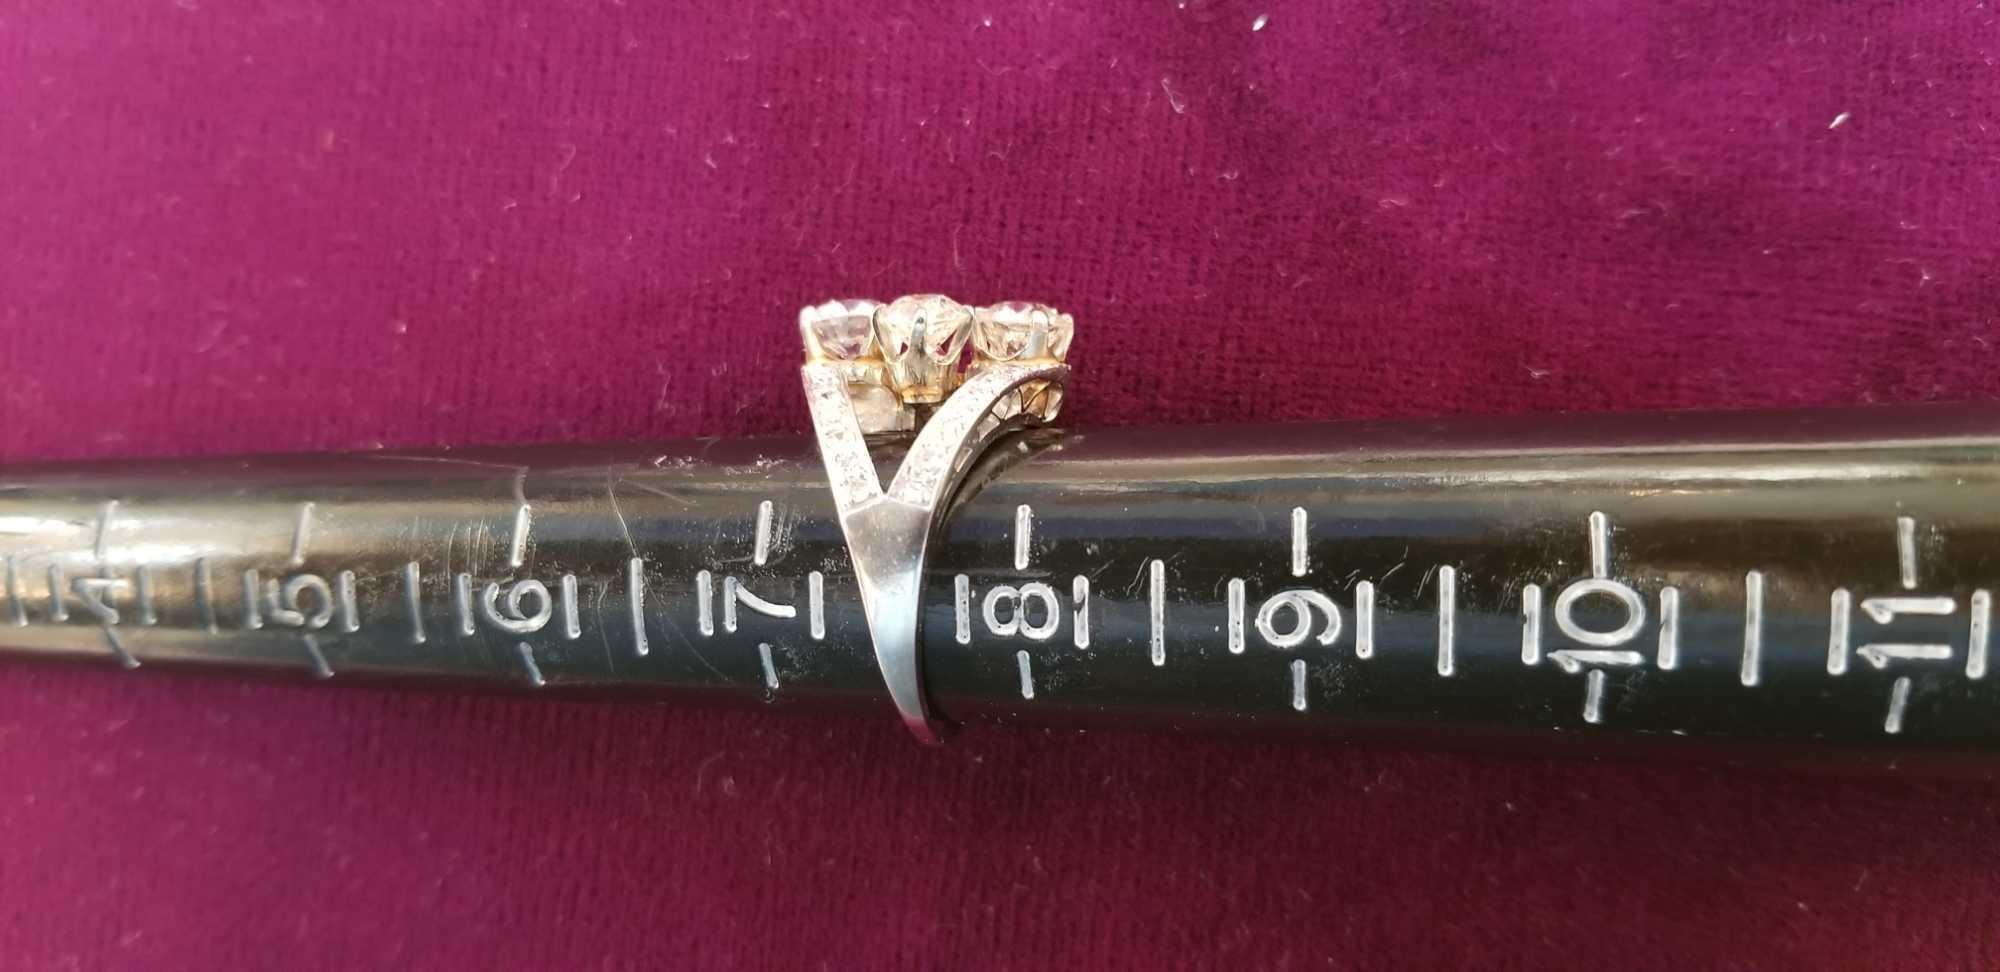 Woman's 14K Diamond Ring